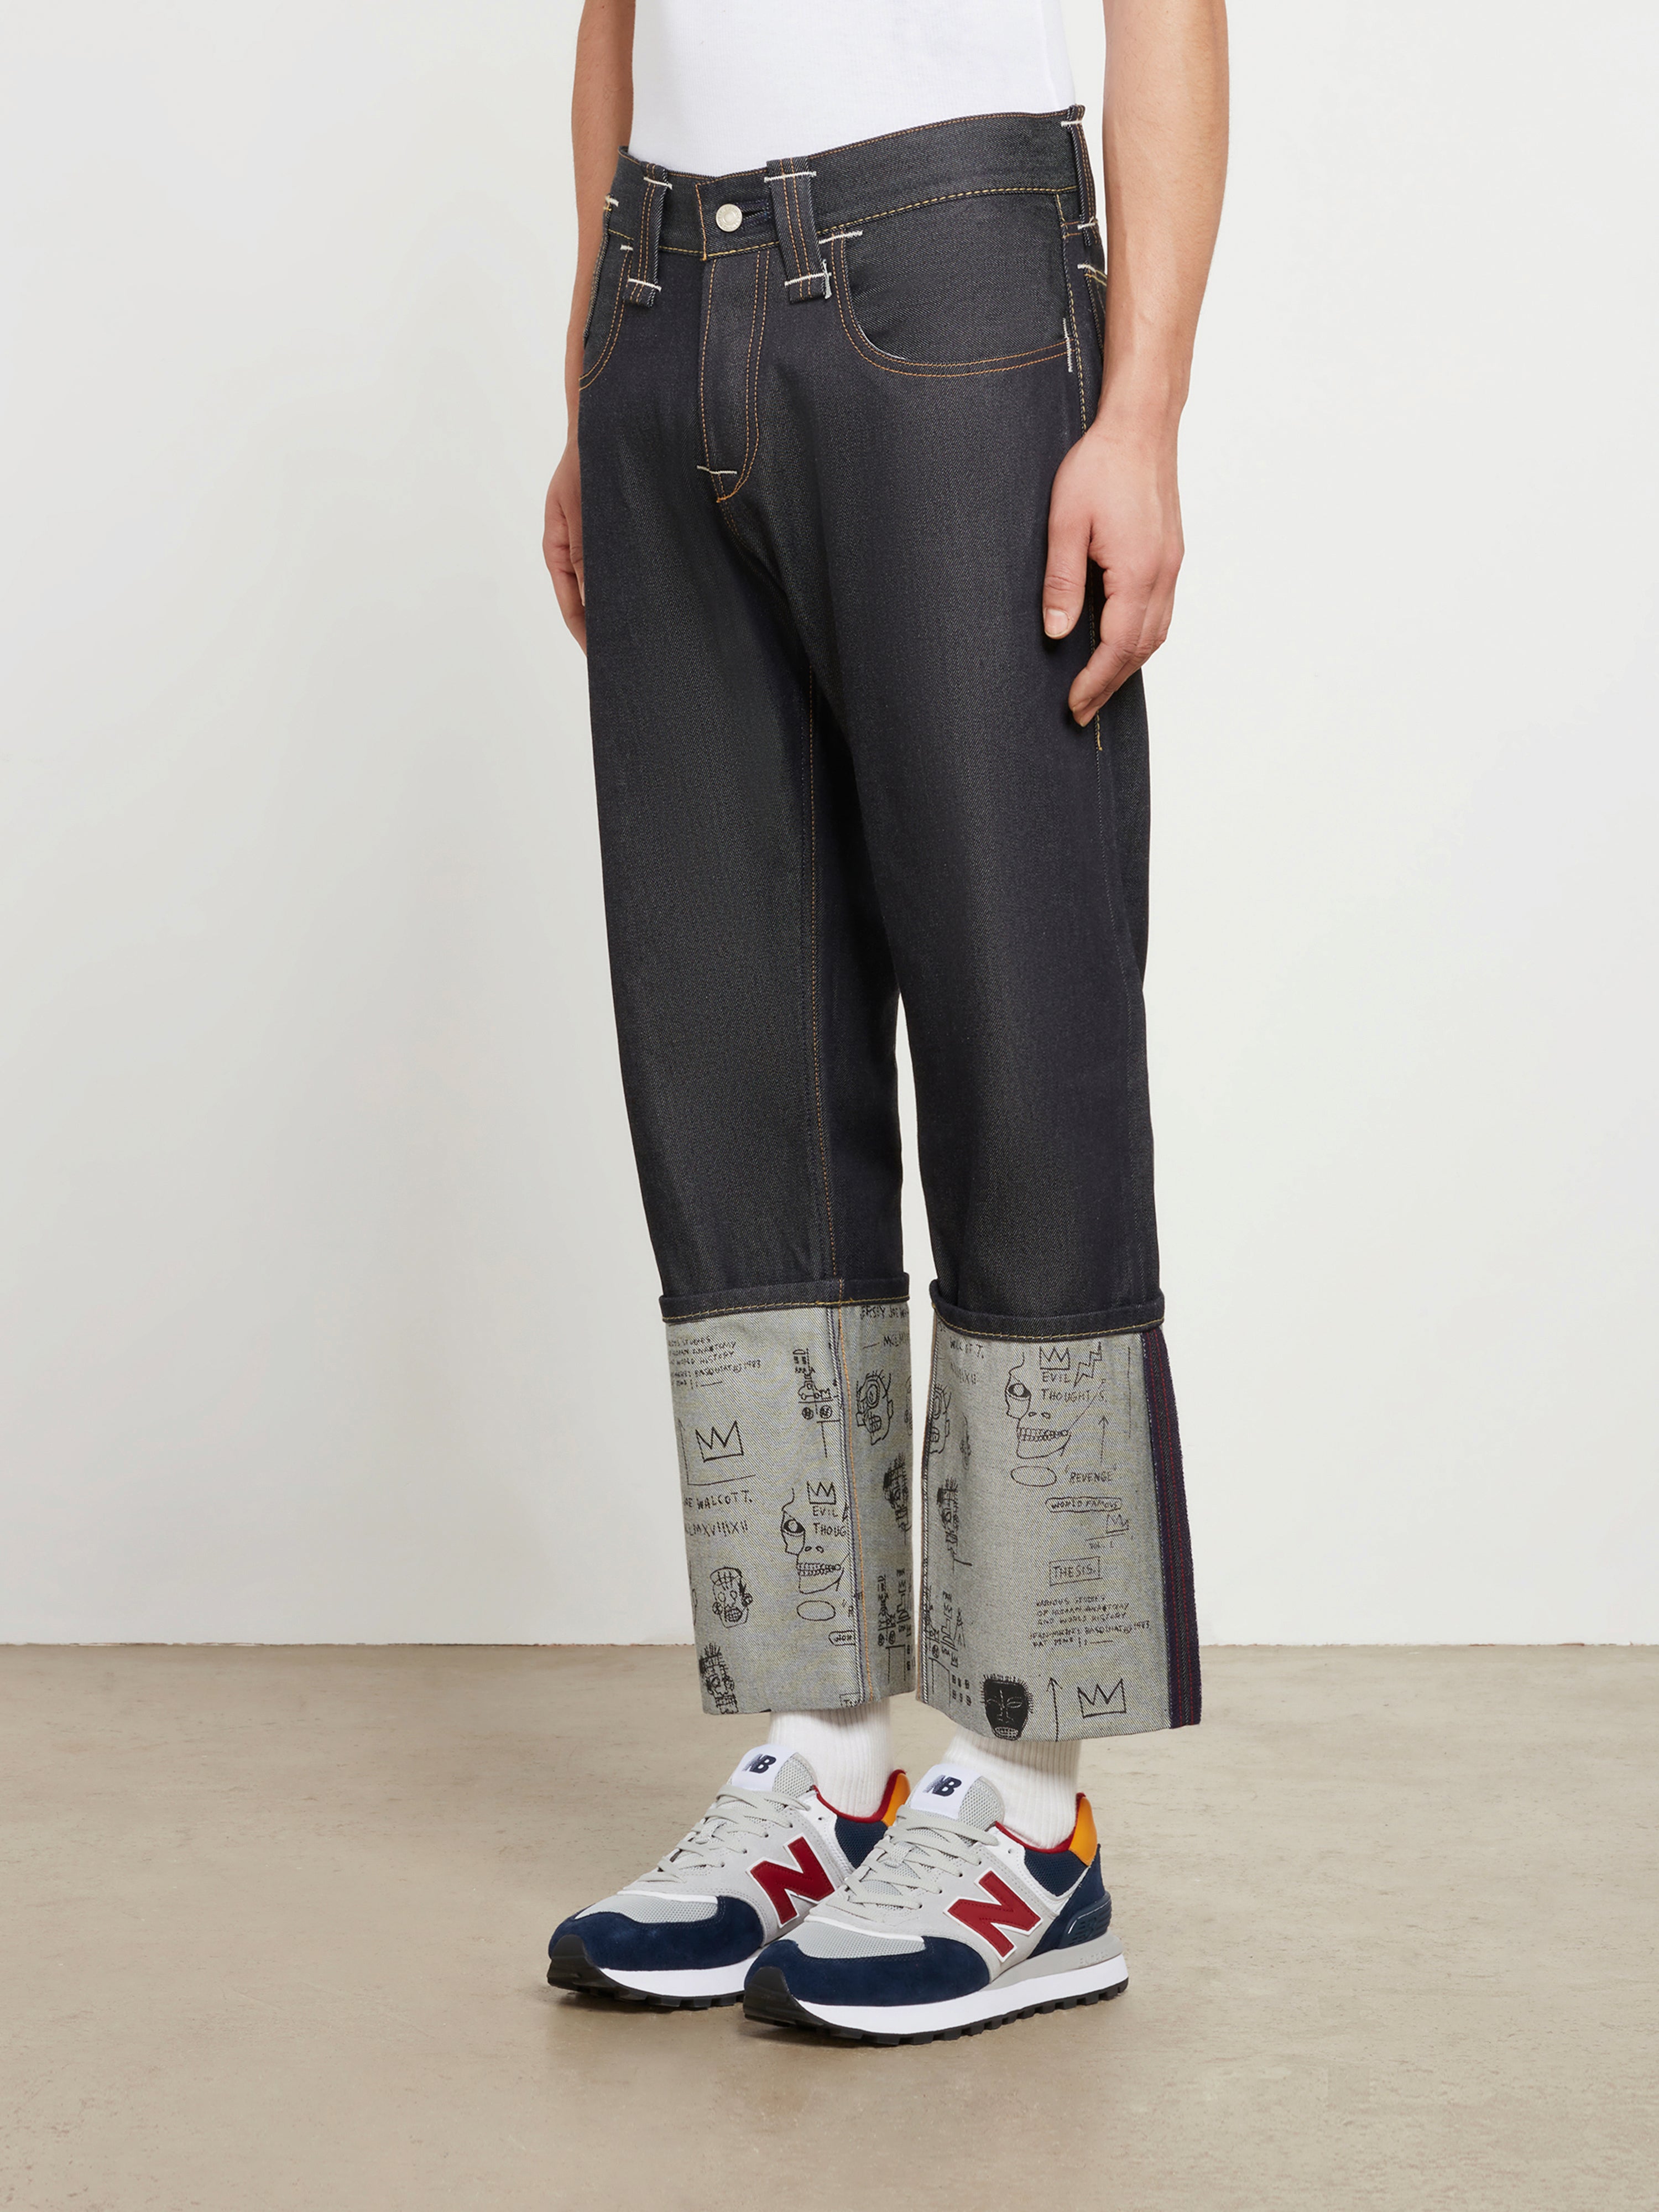 Junya Watanabe MAN - Levi’s x Jean-Michel Basquiat Selvedge Denim Jeans -  (Indigo)